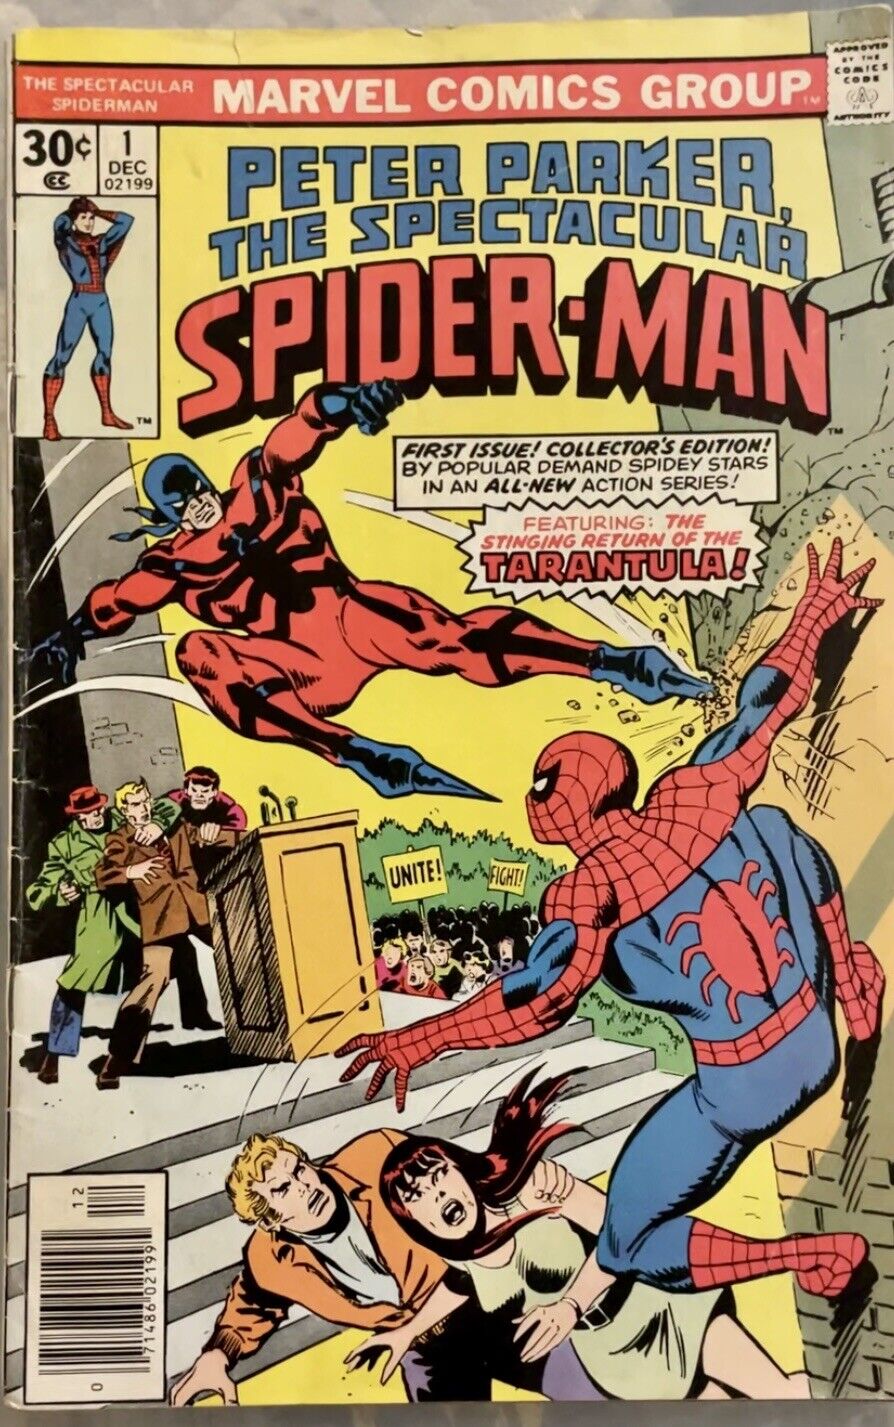 The Spectacular Spider-Man #1 (Marvel Comics December 1976)